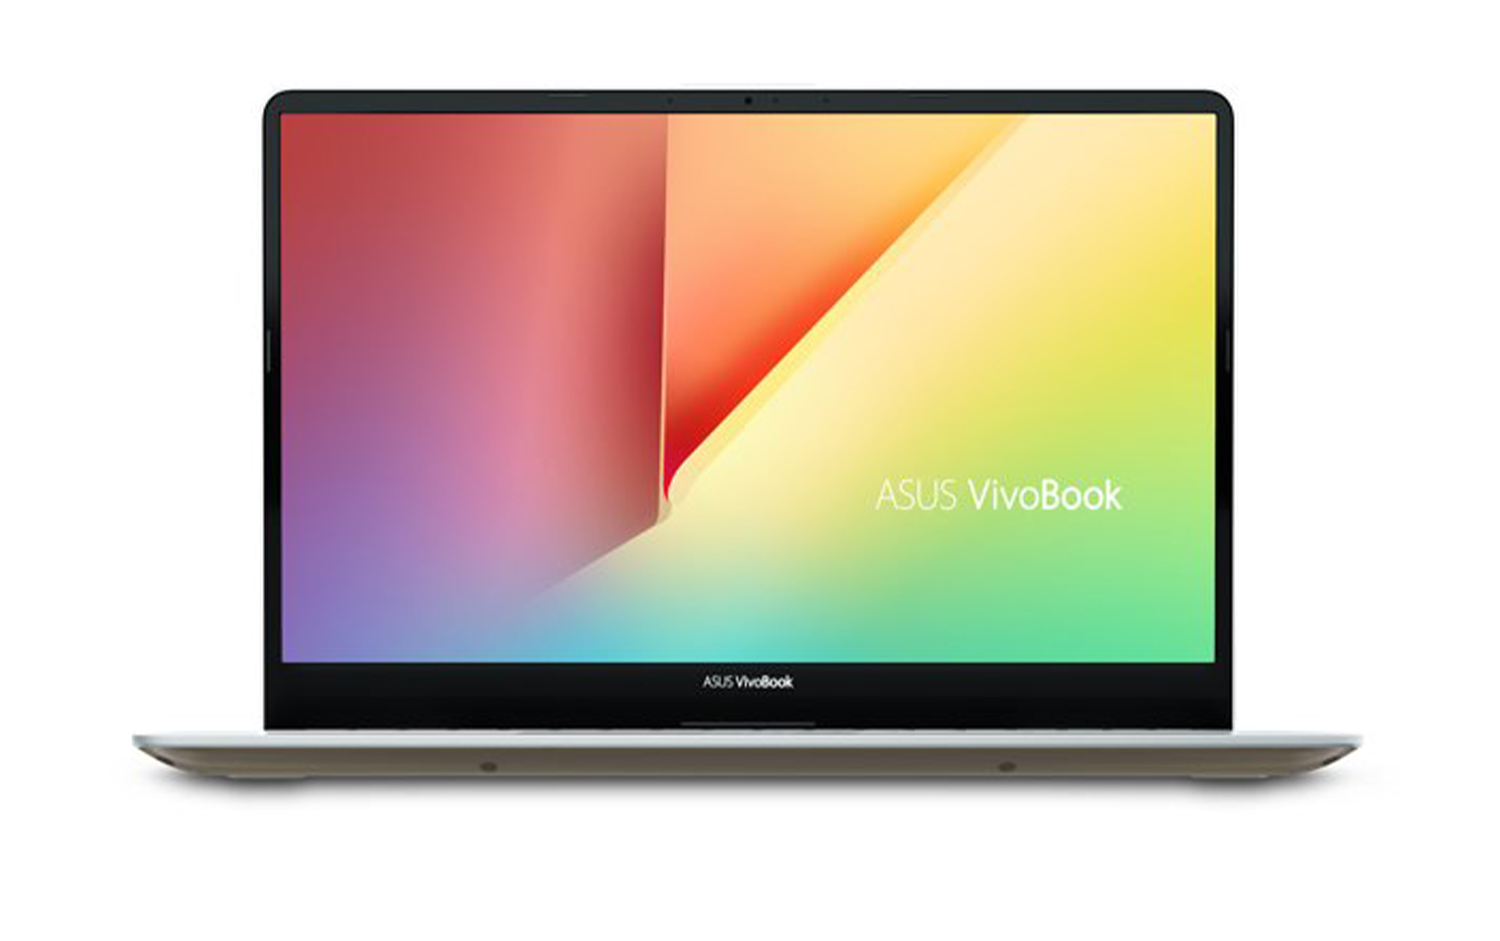 Asus VivoBook S430FN Intel Core i7 8th Gen 8GB RAM 1TB HDD+256GB SSD Windows 10 Home